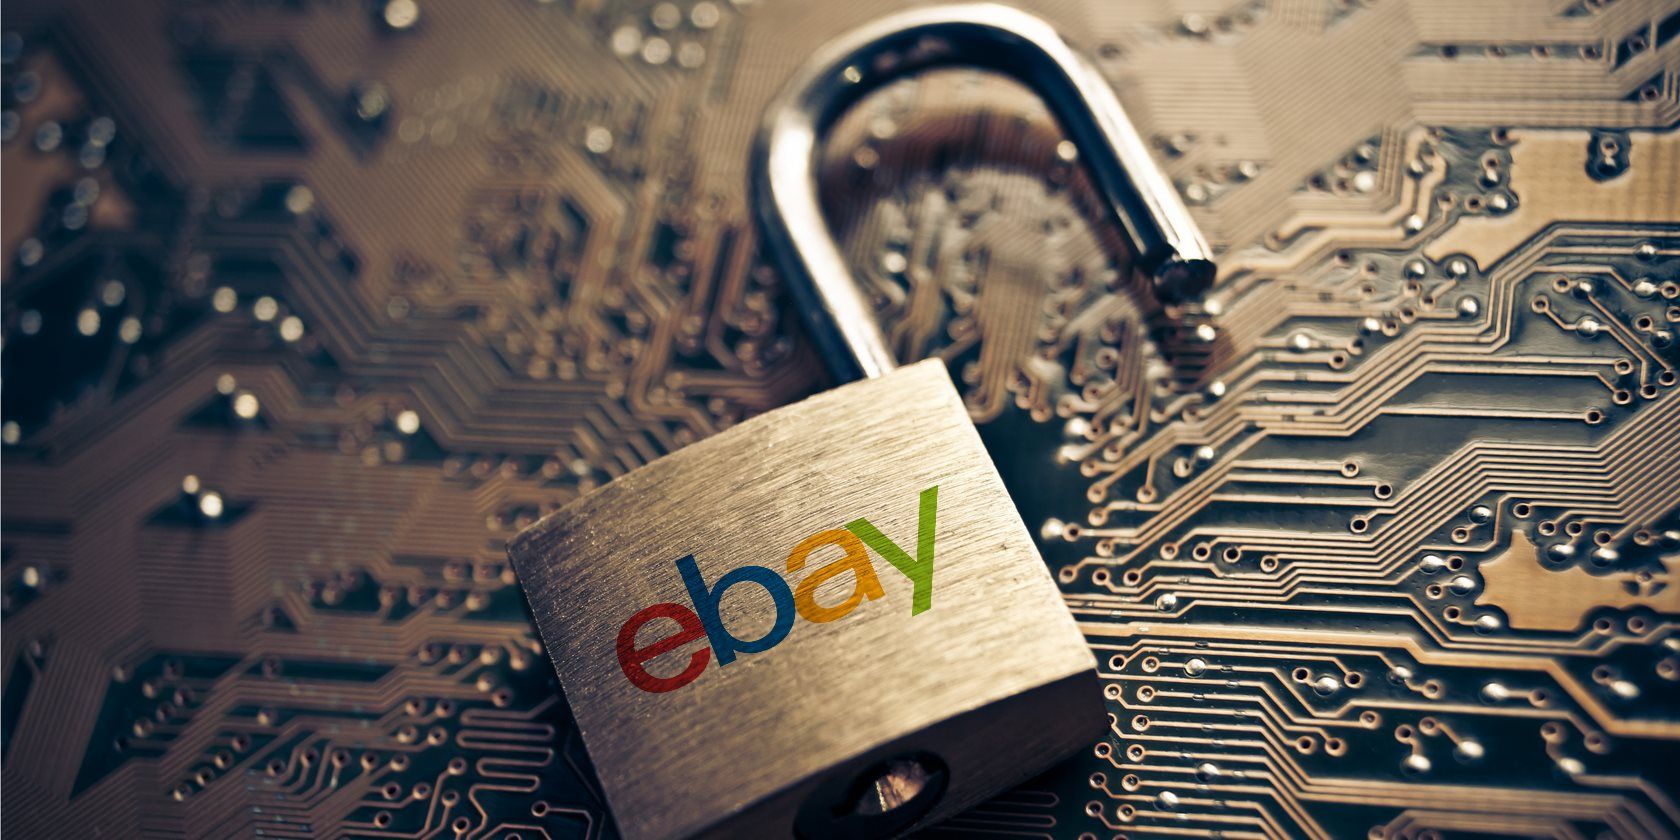 ebay data breach 2014 case study pdf